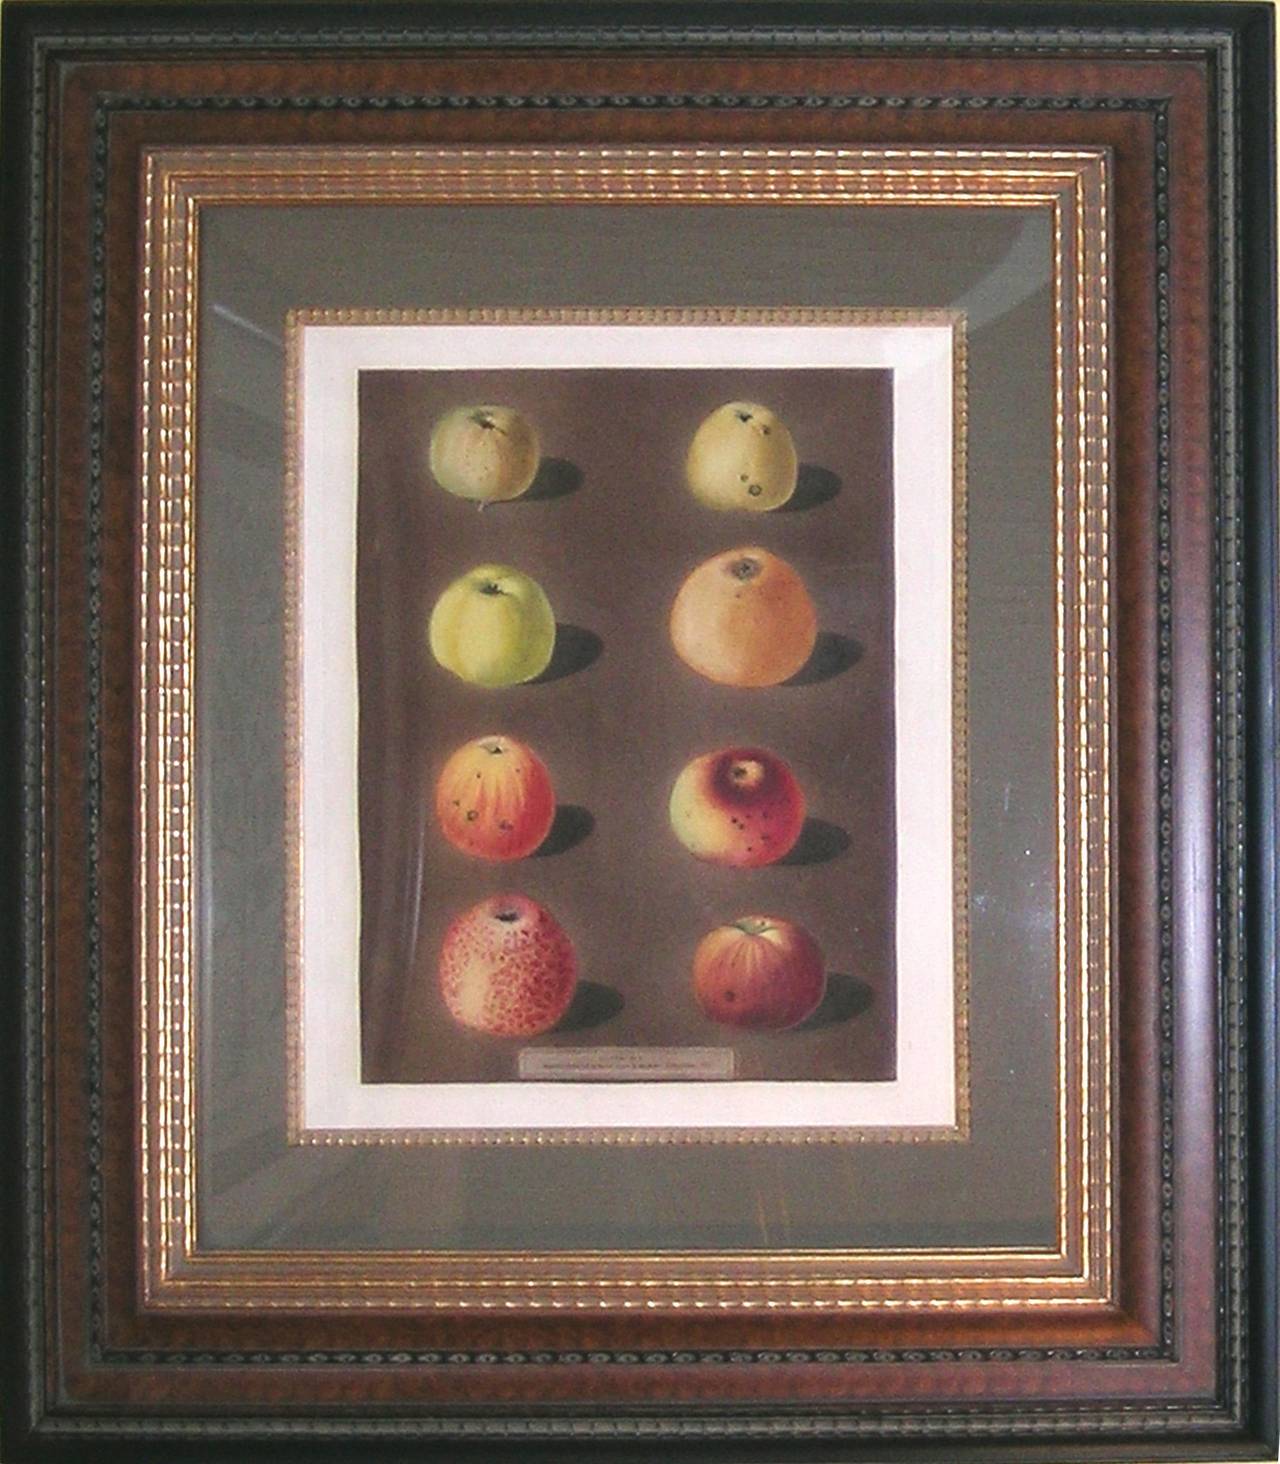 Plate 91.  Apples.